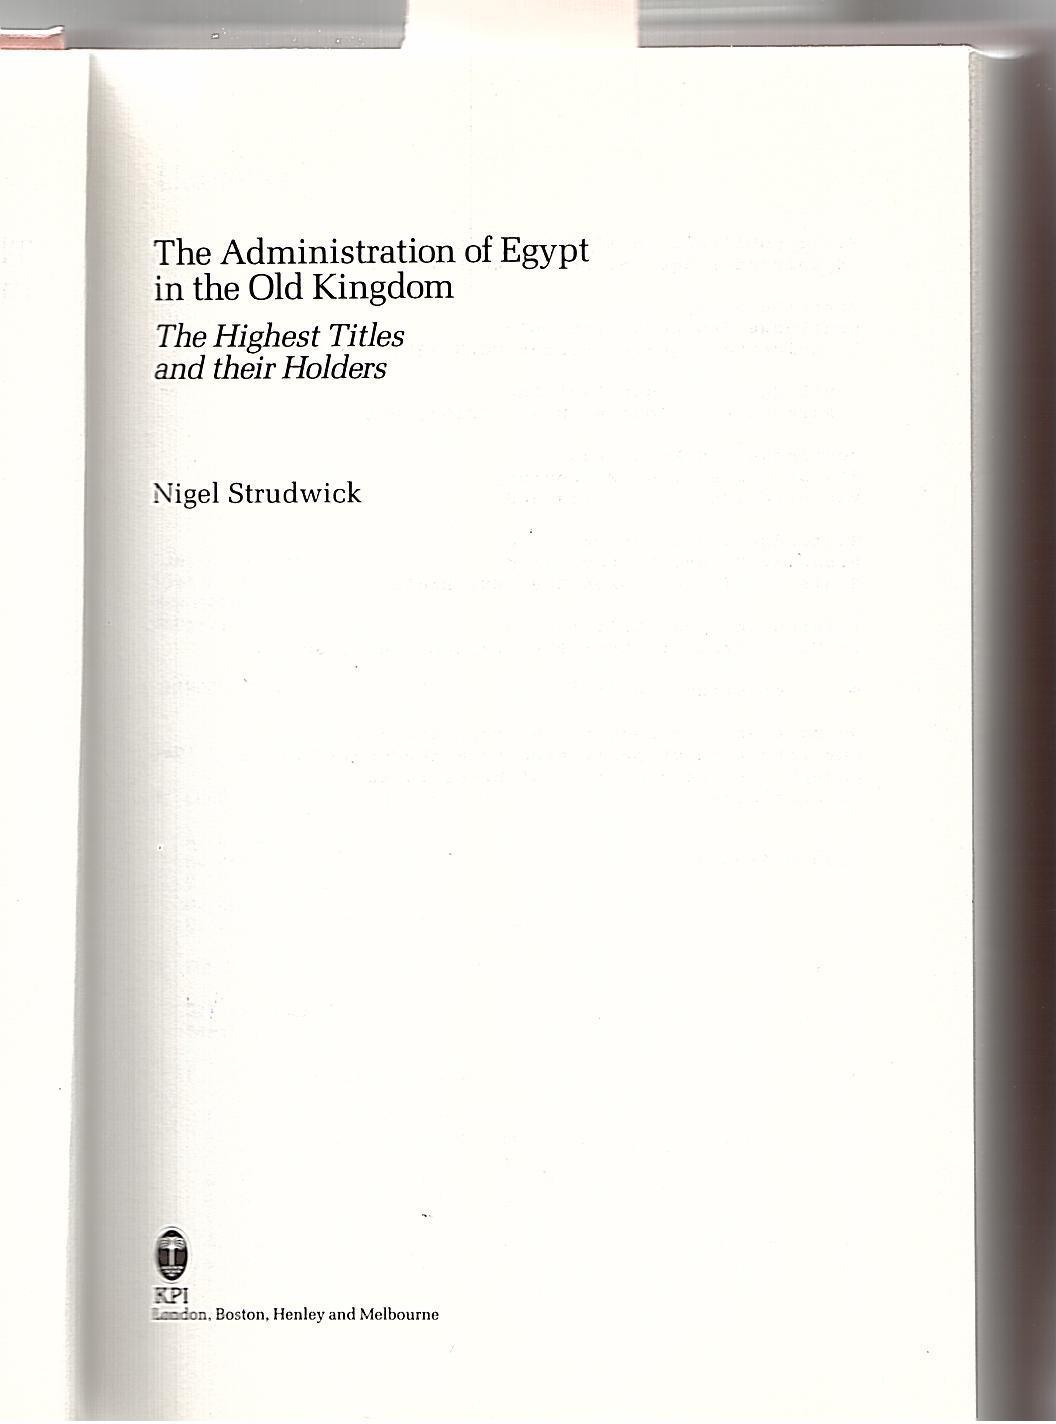 Admin Of Egypt In Old Kingdom